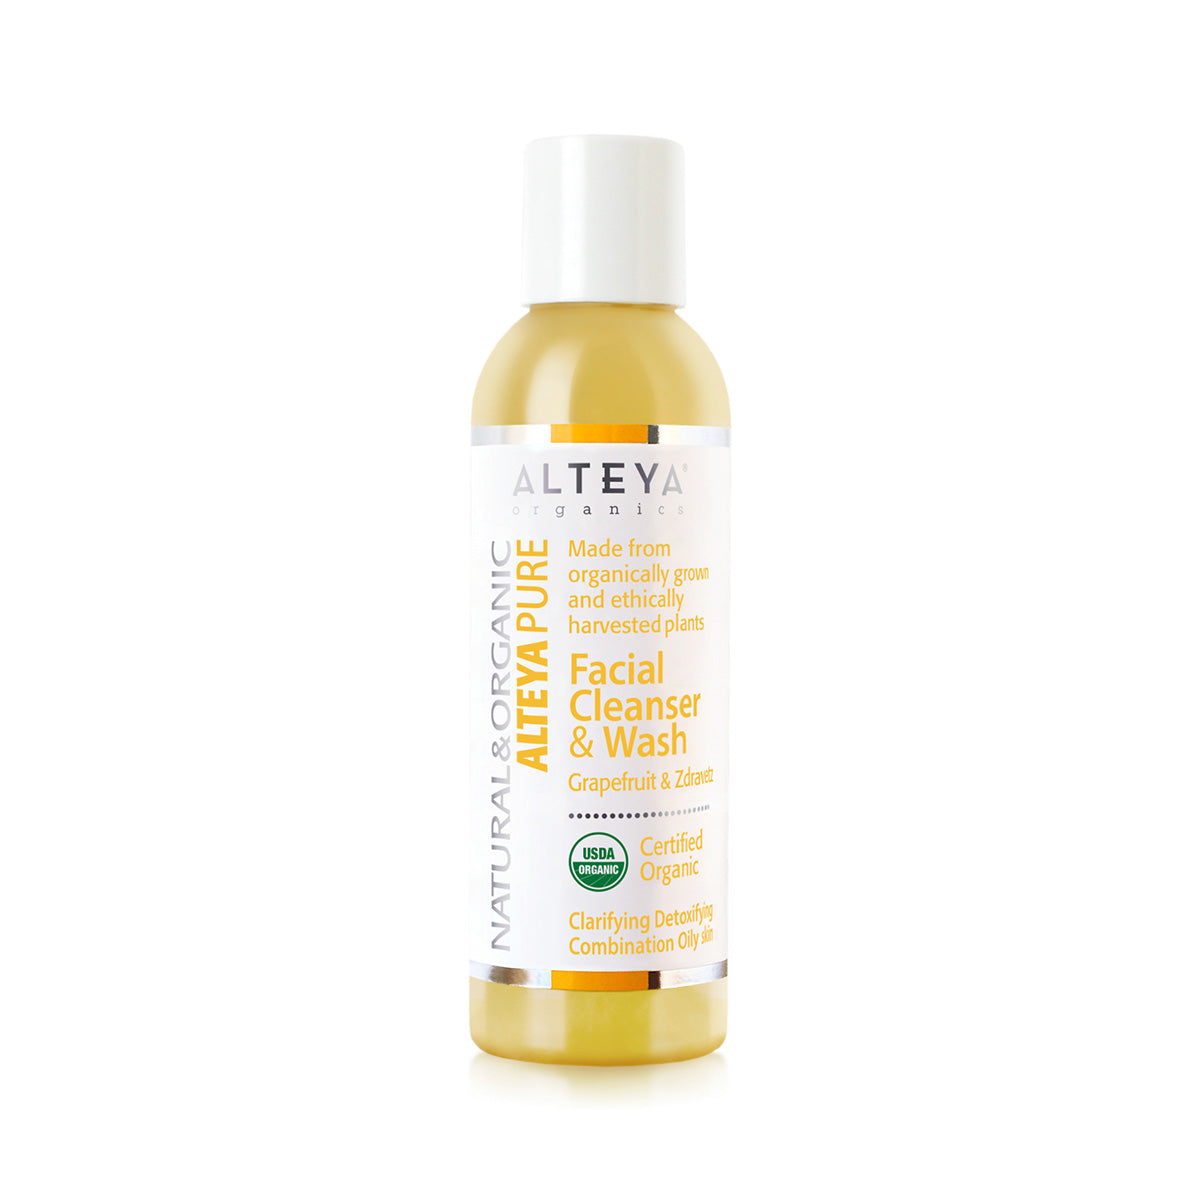 A bottle of Alteya Organics Facial Cleanser & Wash - Grapefruit & Zdravetz on a white background.